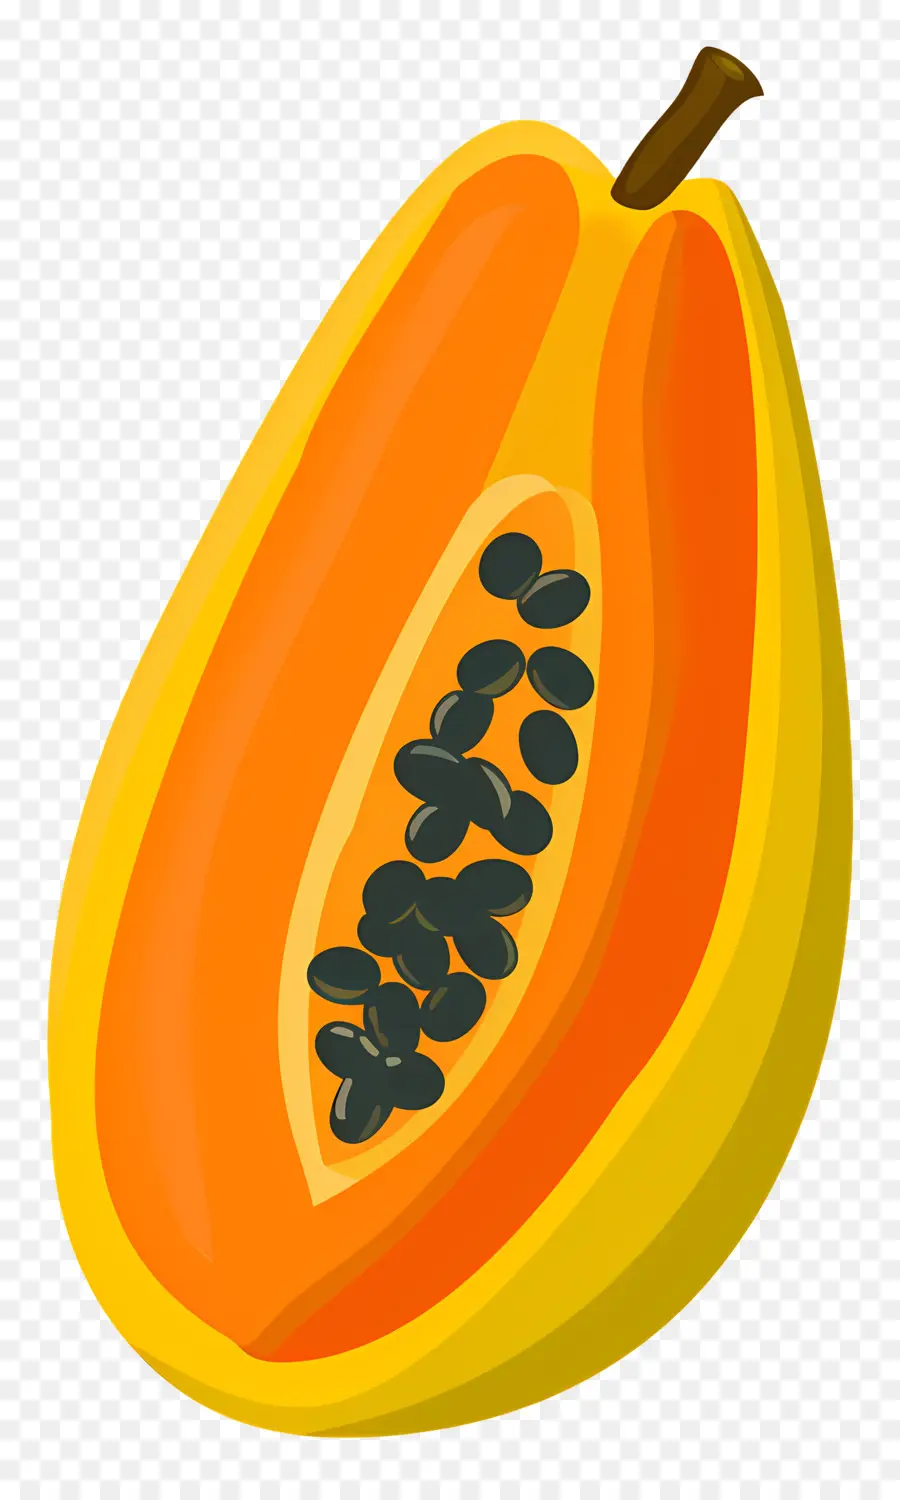 Papaya，Olgun Meyve PNG